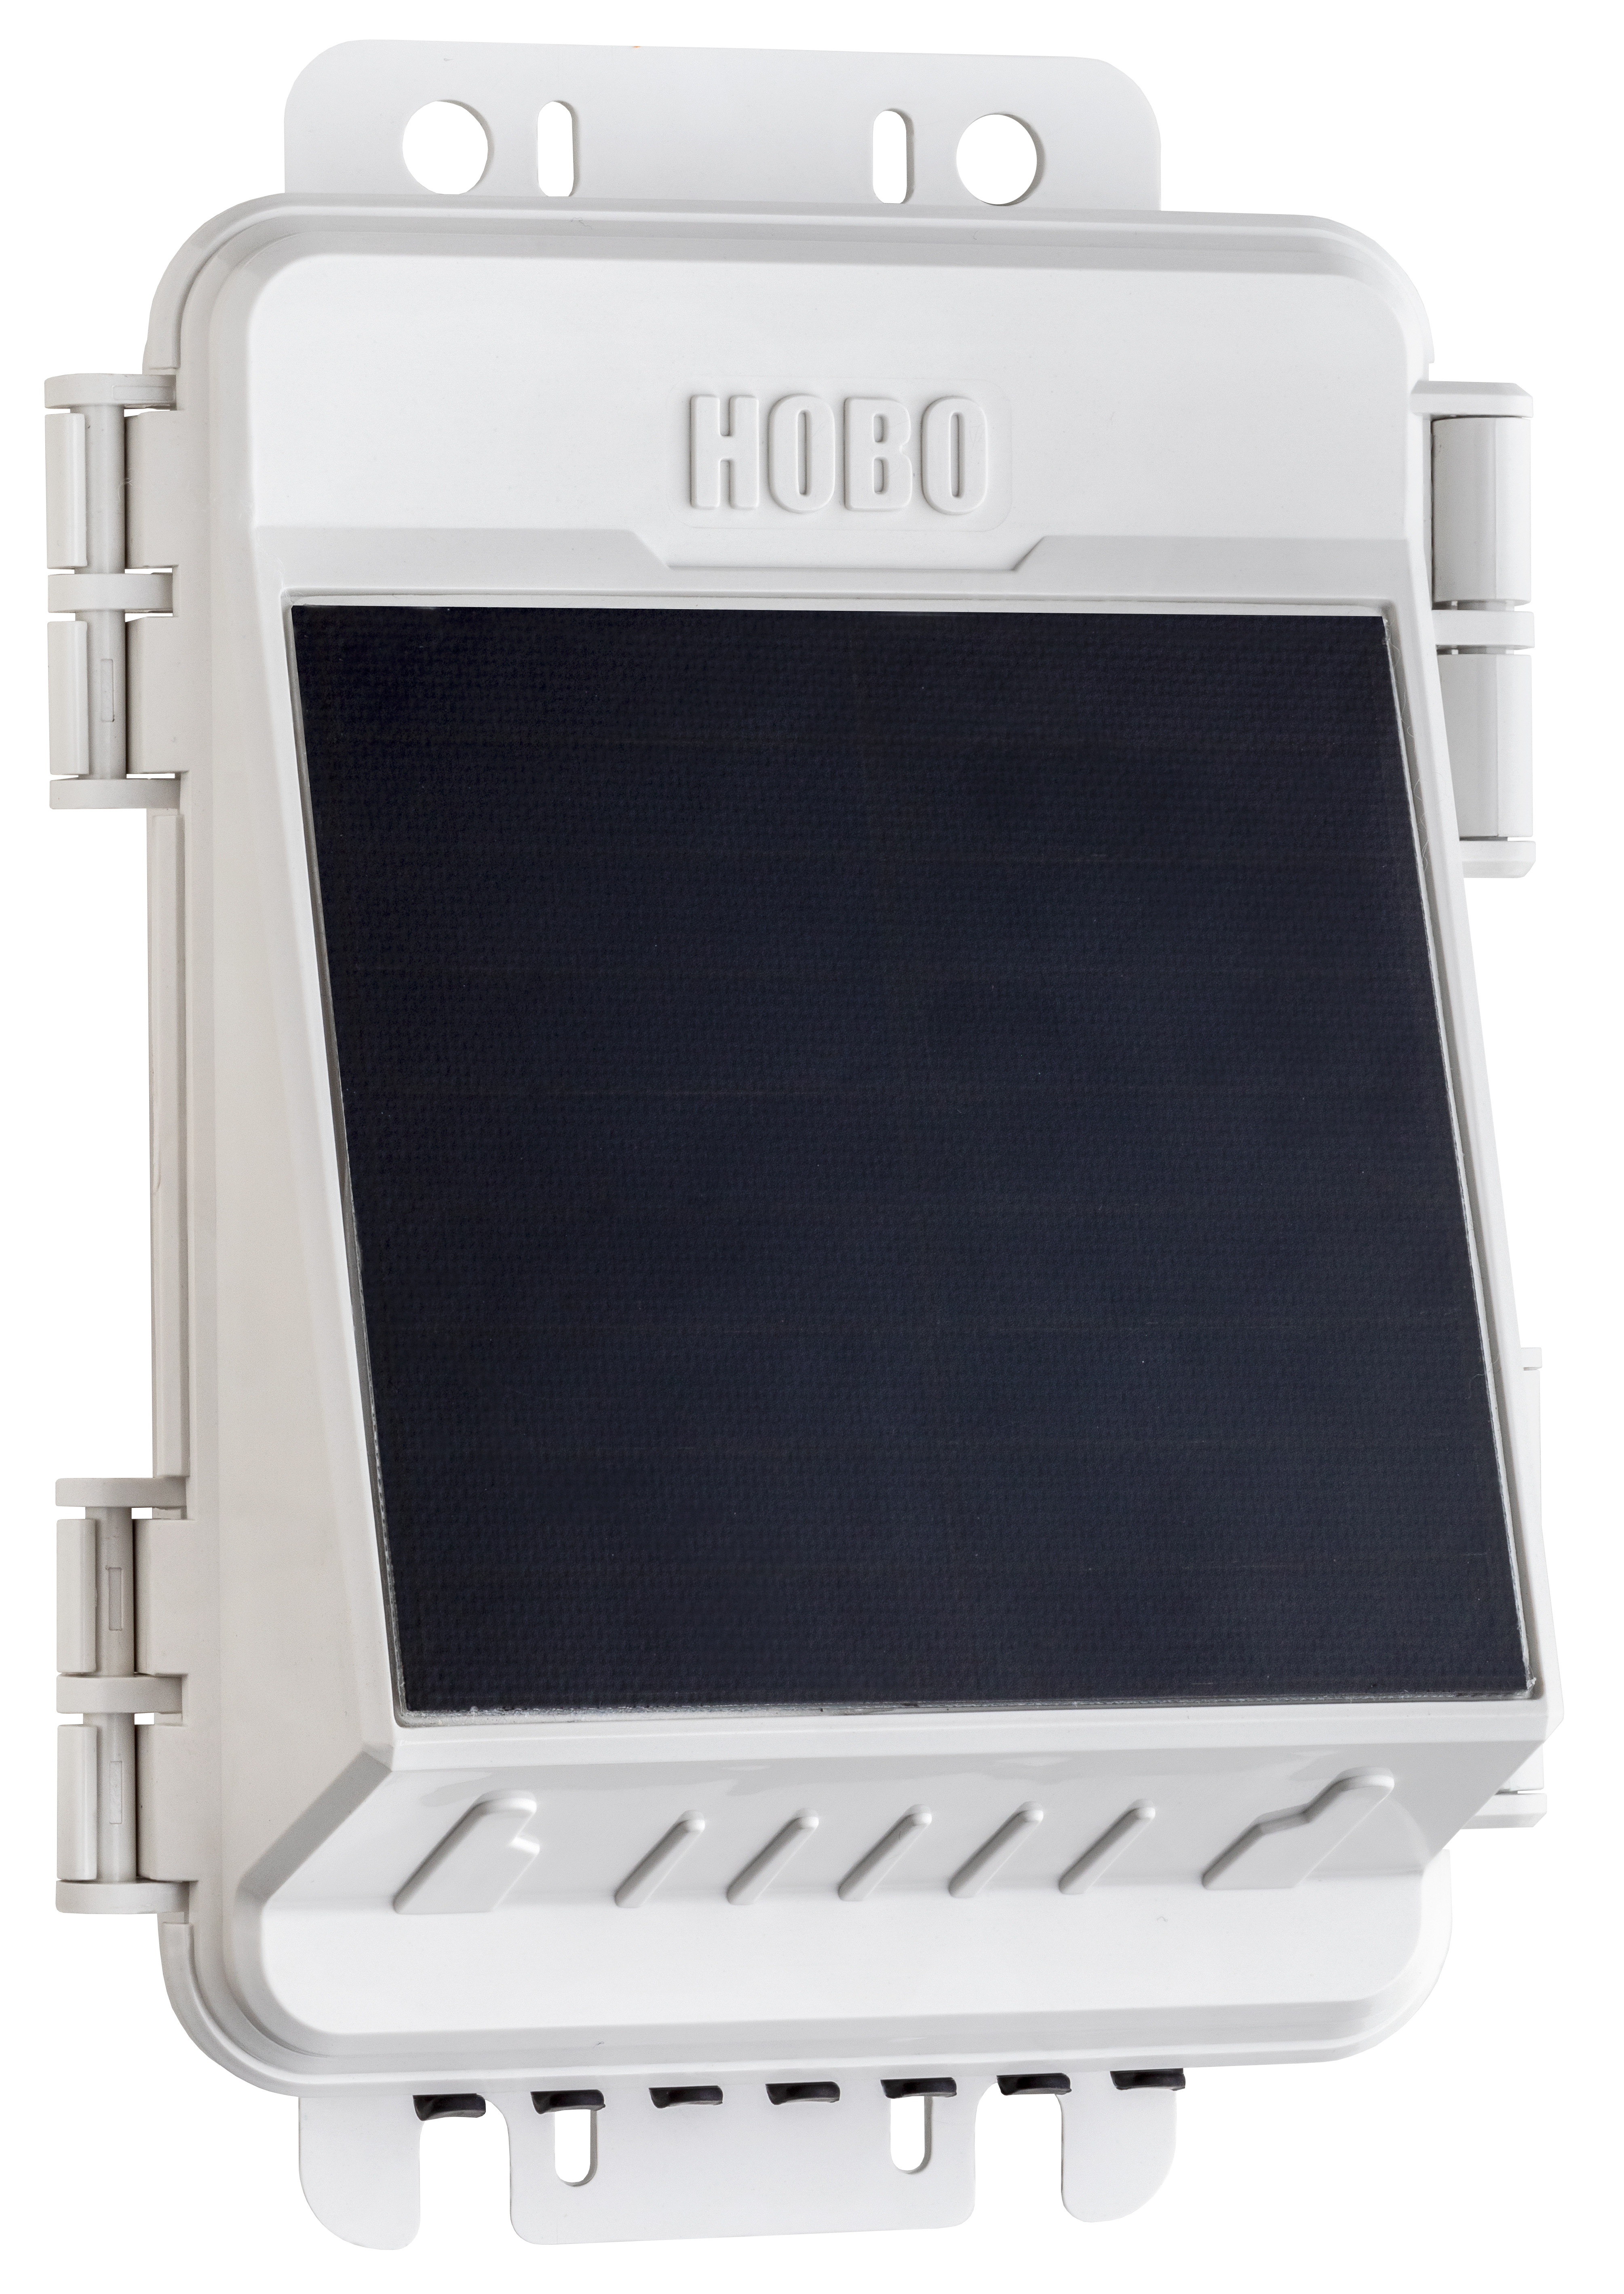 HOBO MicroRX Station (Solar) RX2102